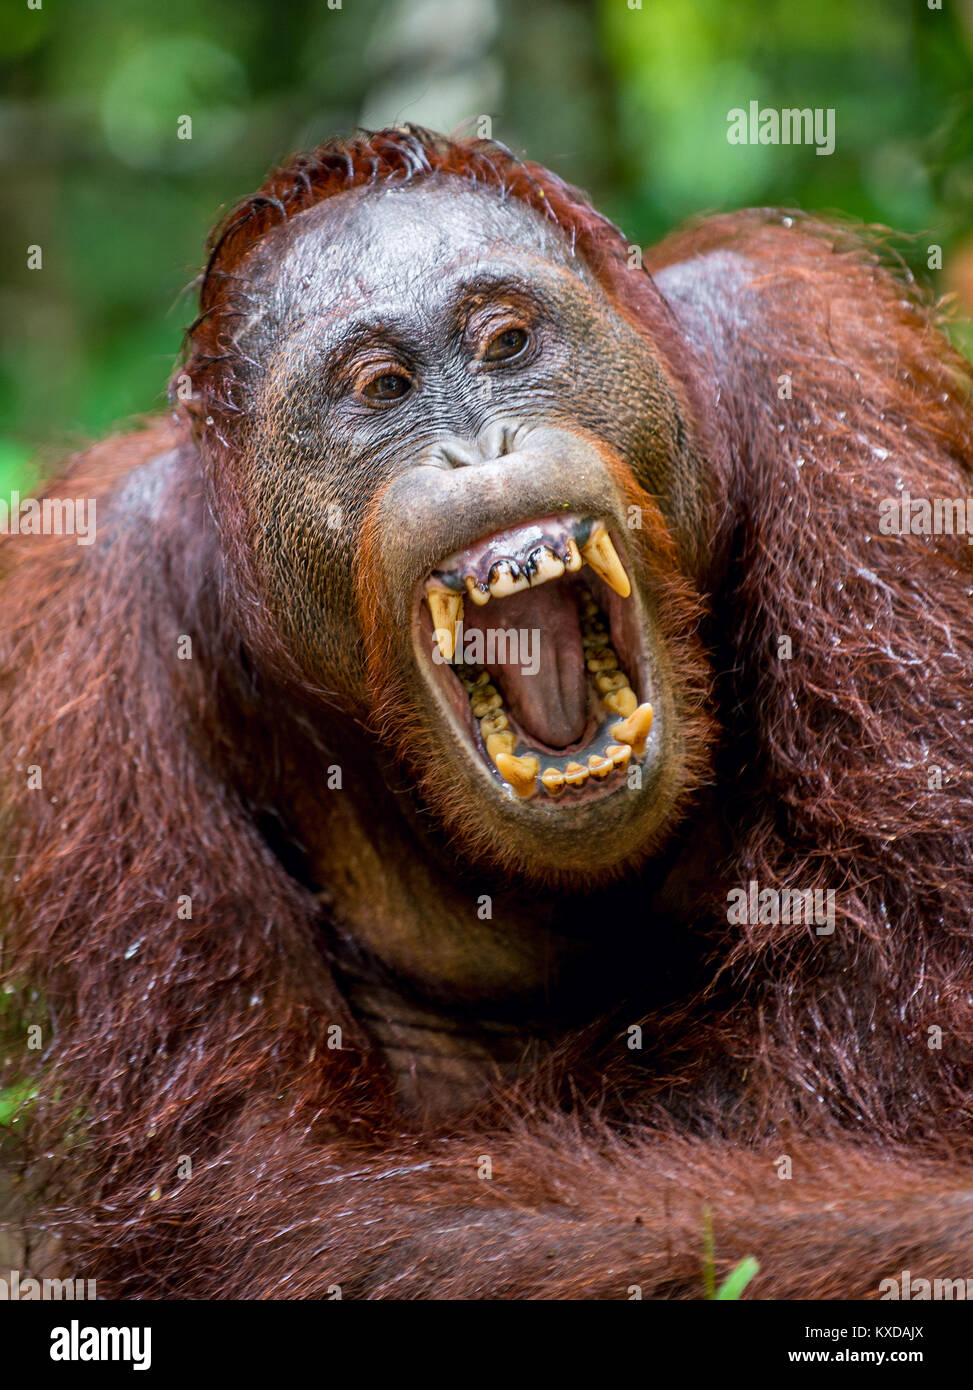 A close up portrait of the Bornean orangutan (Pongo pygmaeus) with open mouth. Wild nature. Central Bornean orangutan  ( Pongo pygmaeus wurmbii ) in n Stock Photo